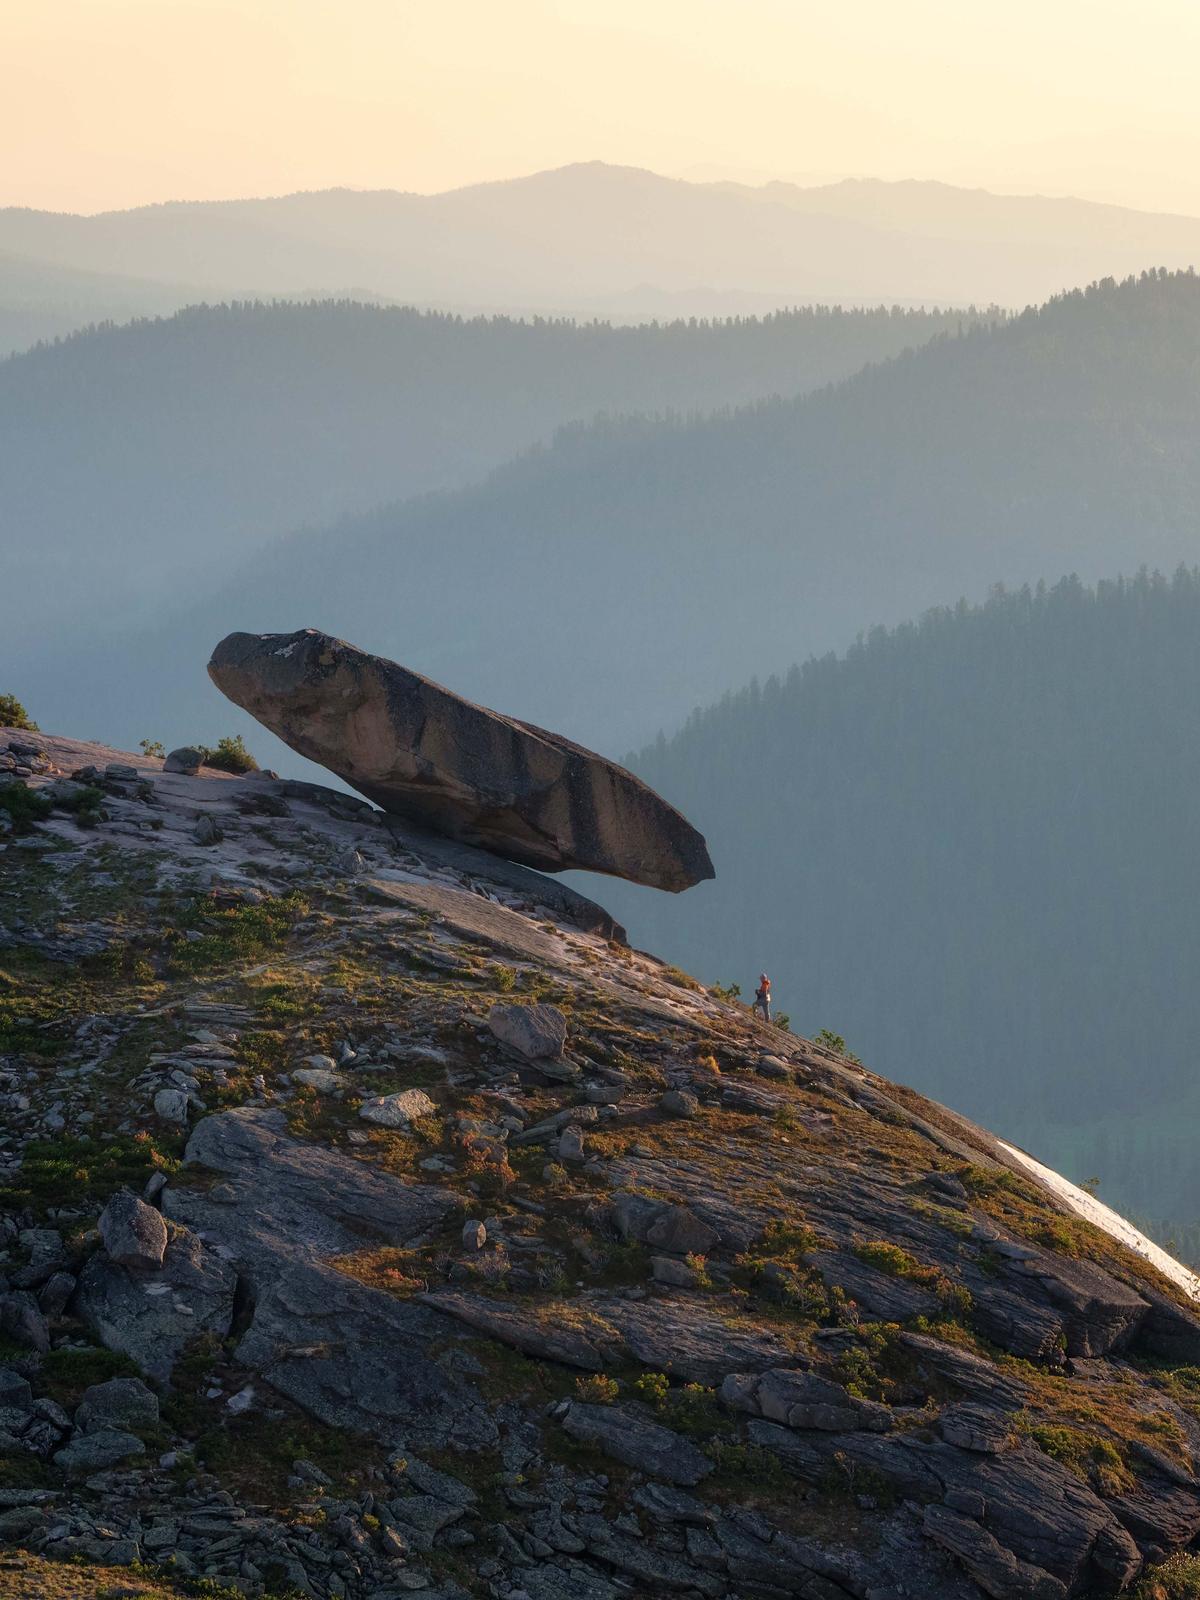 Hanging Rock high on a mound of rock. (Stanislav71/Shutterstock)